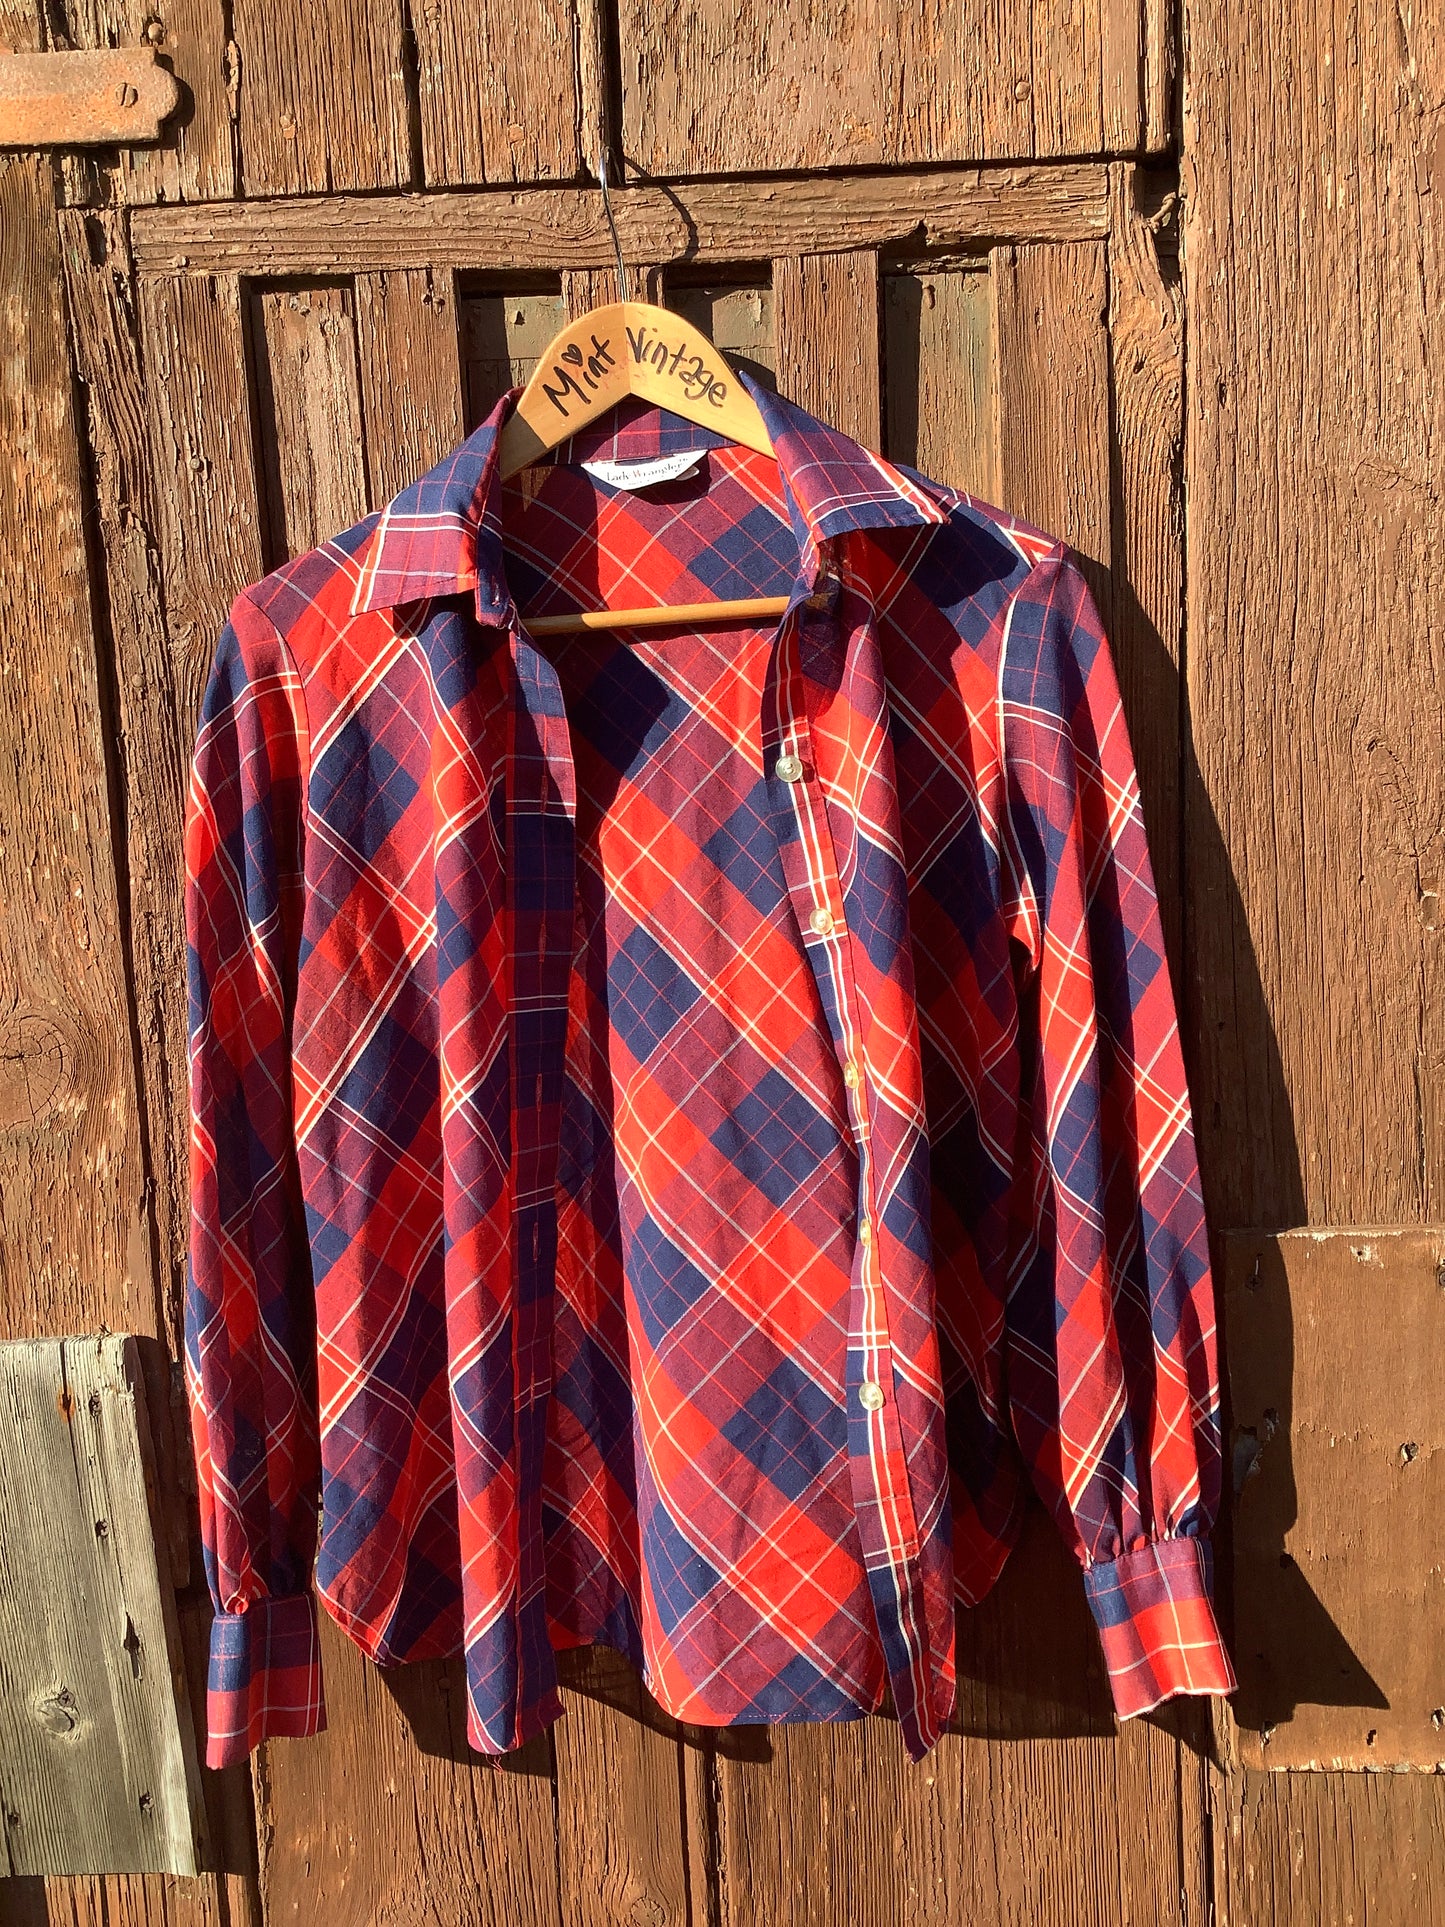 Vintage 1970’s western style wrangler shirt